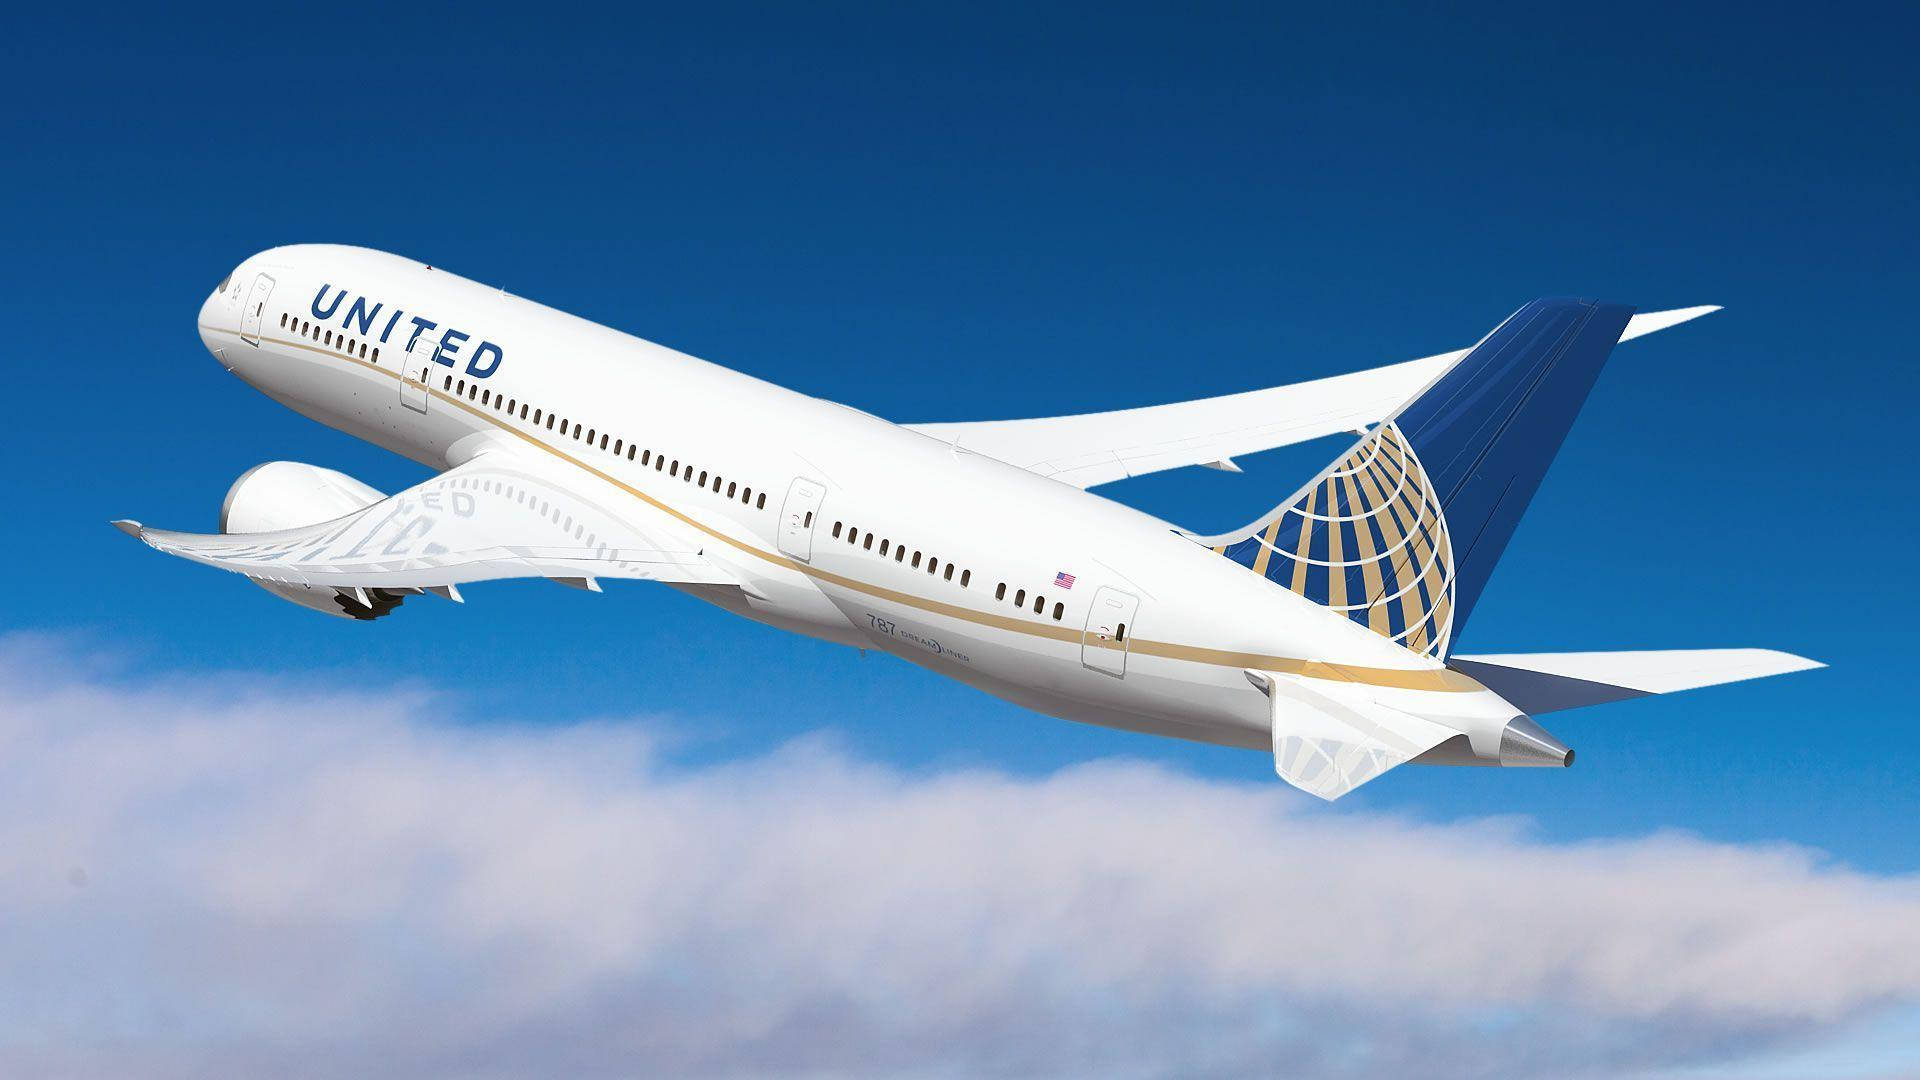 White United Airlines Plane Wallpaper